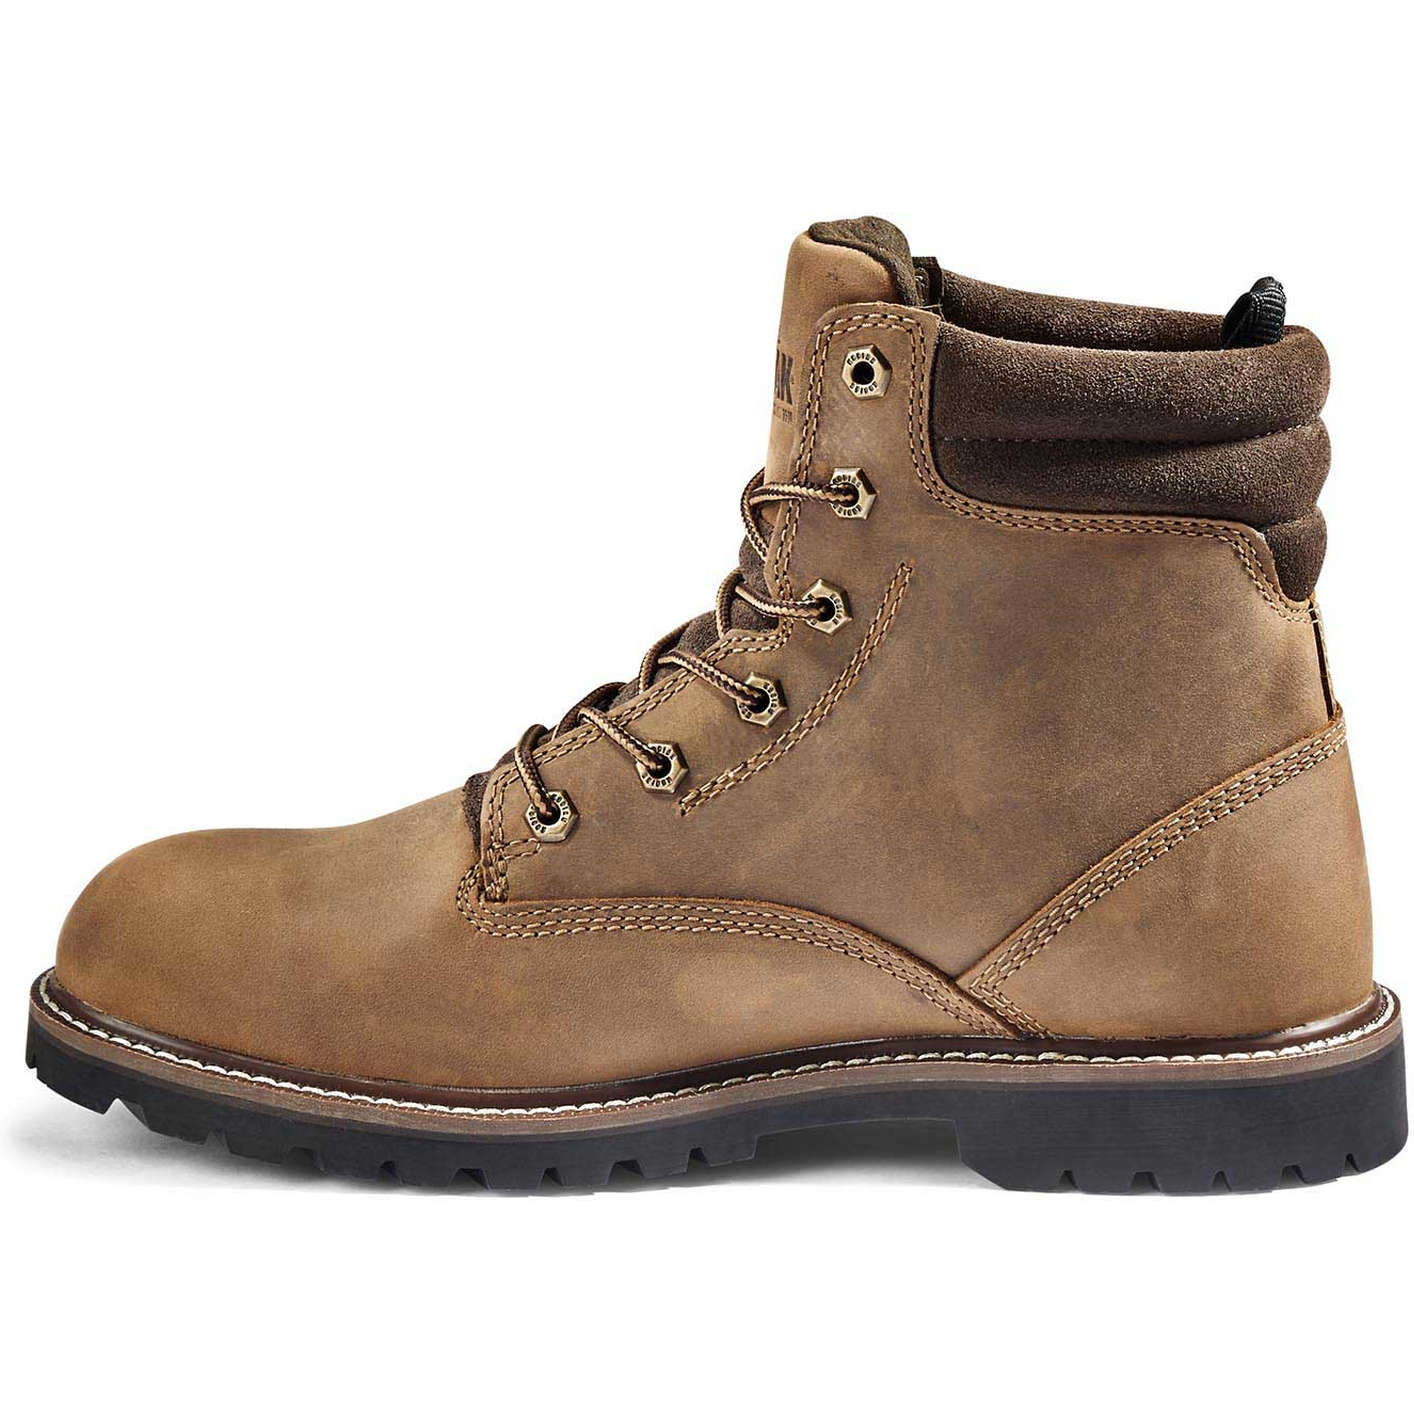 Kodiak Men's Mckinney 6" WP Slip Resist Safety Work Boot -Brown- 4TDQBN  - Overlook Boots